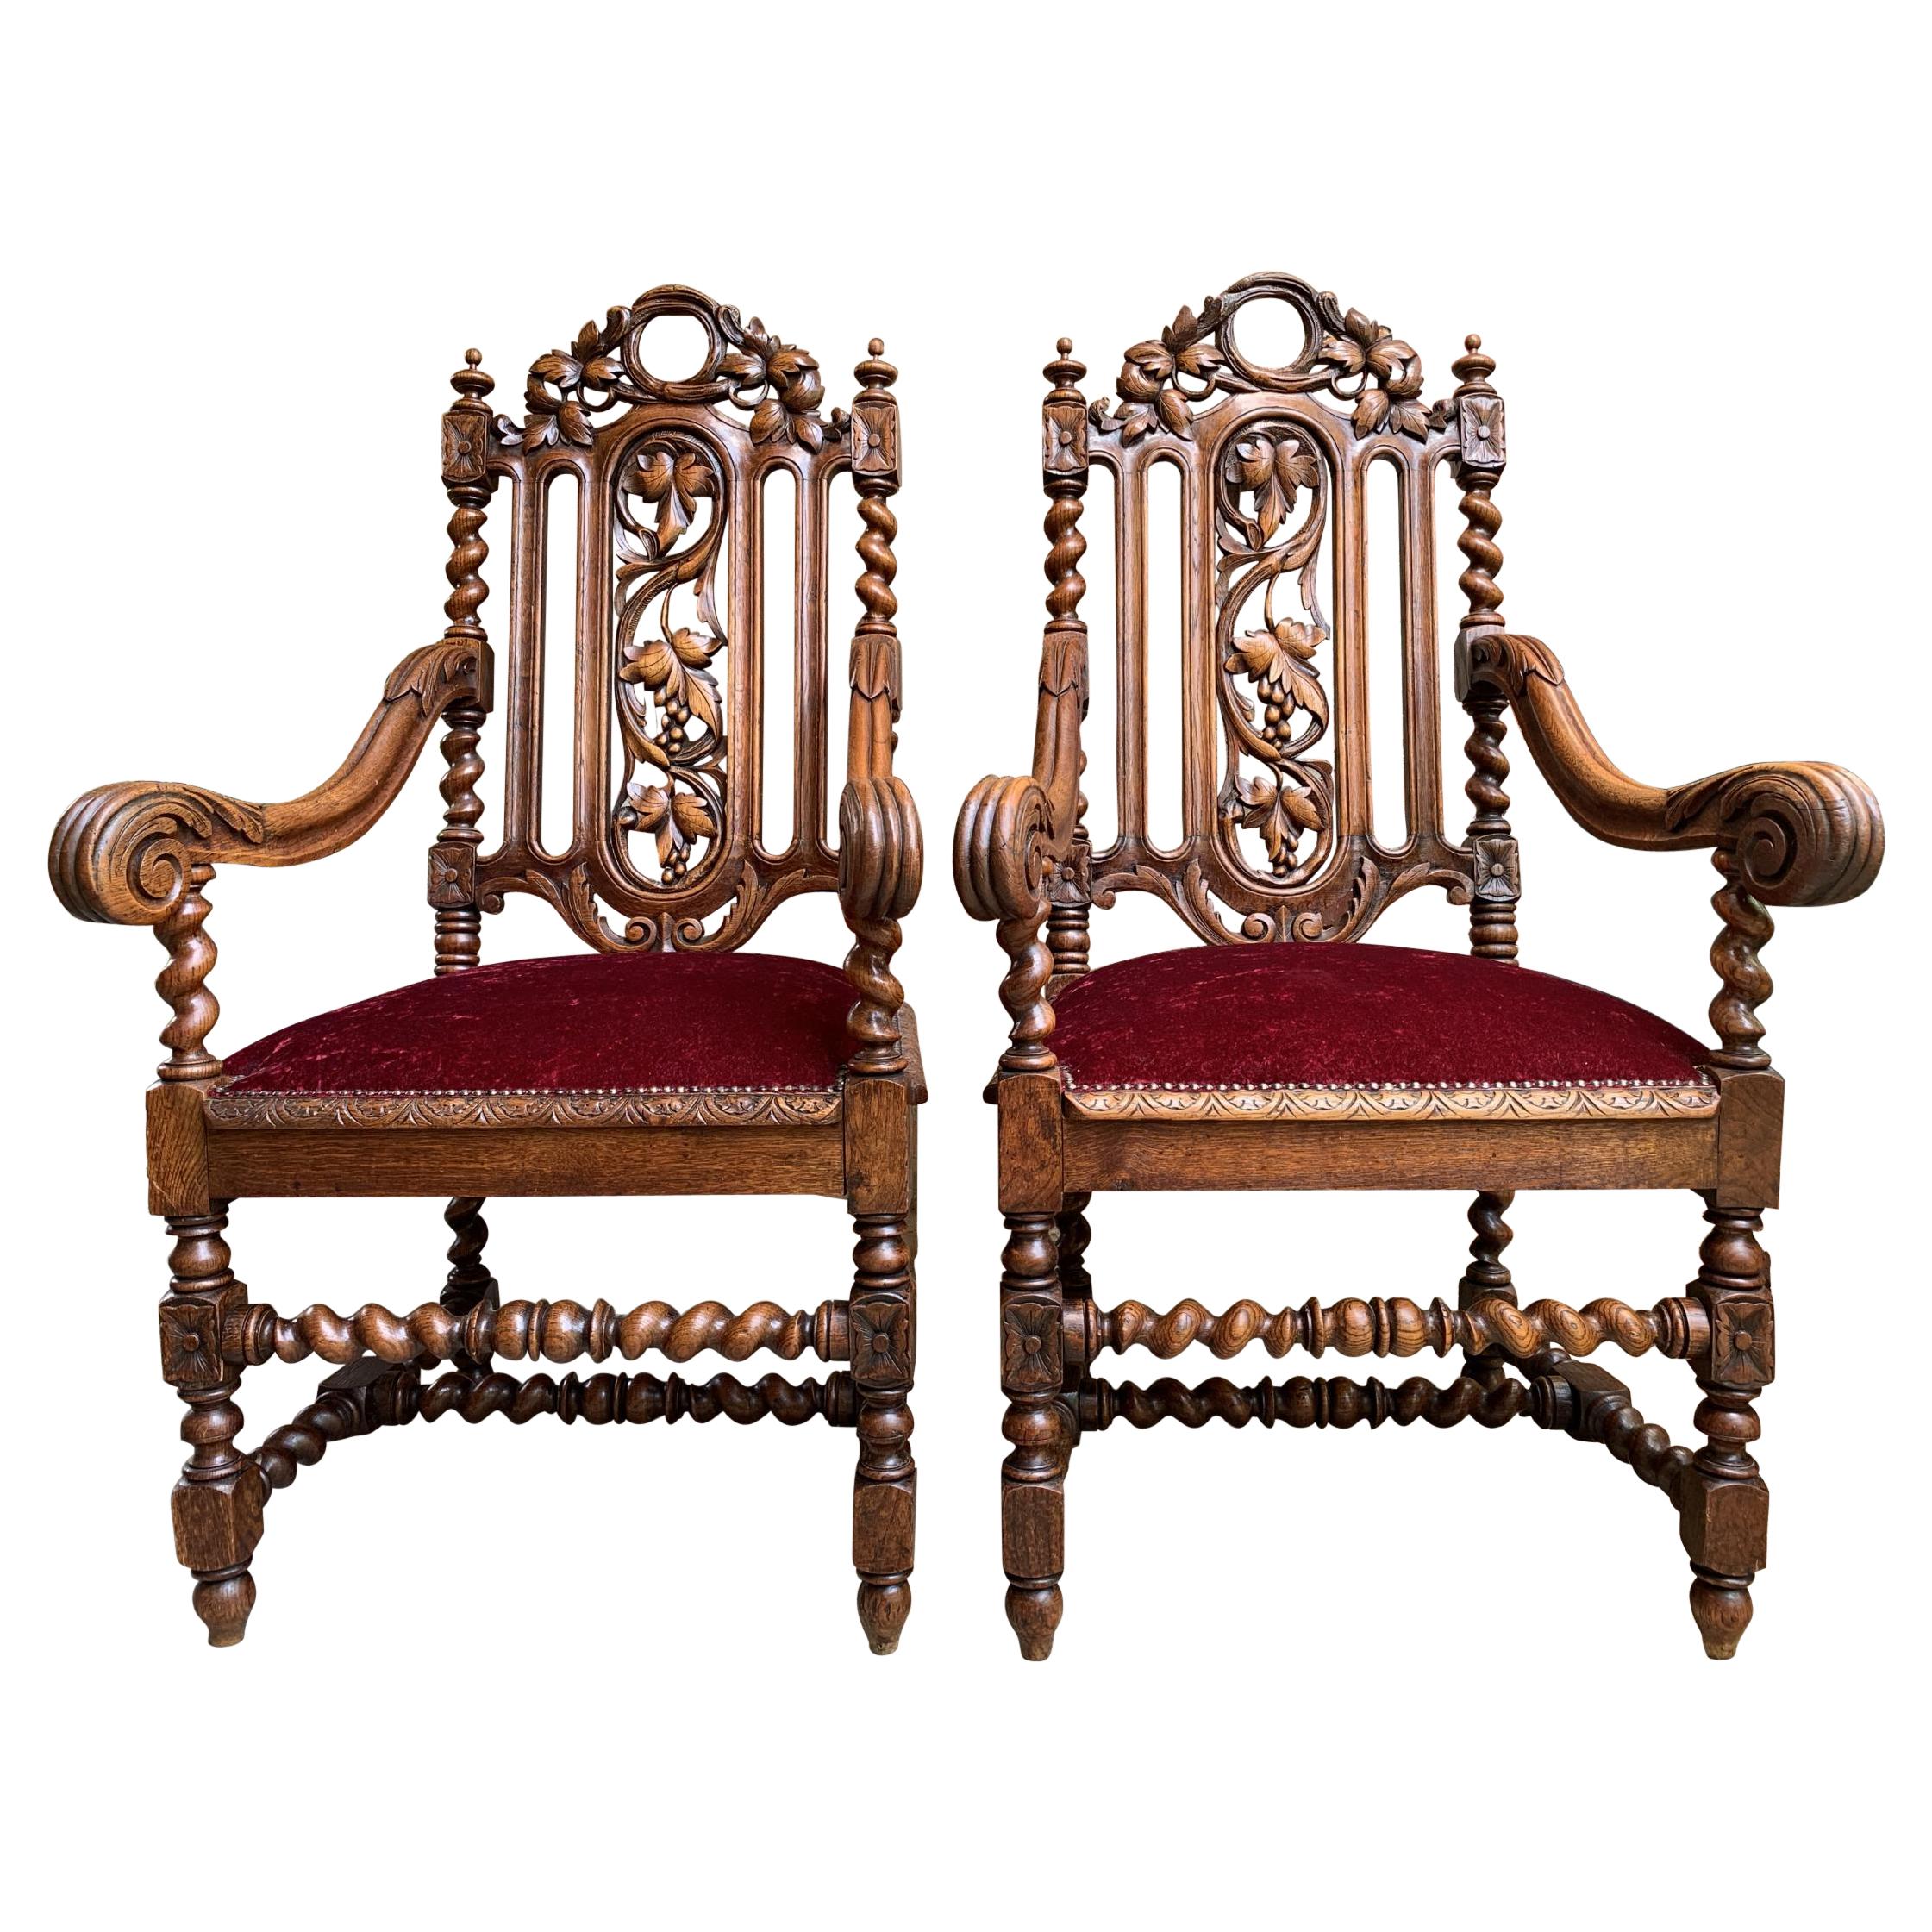 19th century PAIR French Carved Oak Arm Chair Barley Twist Louis XIII Throne